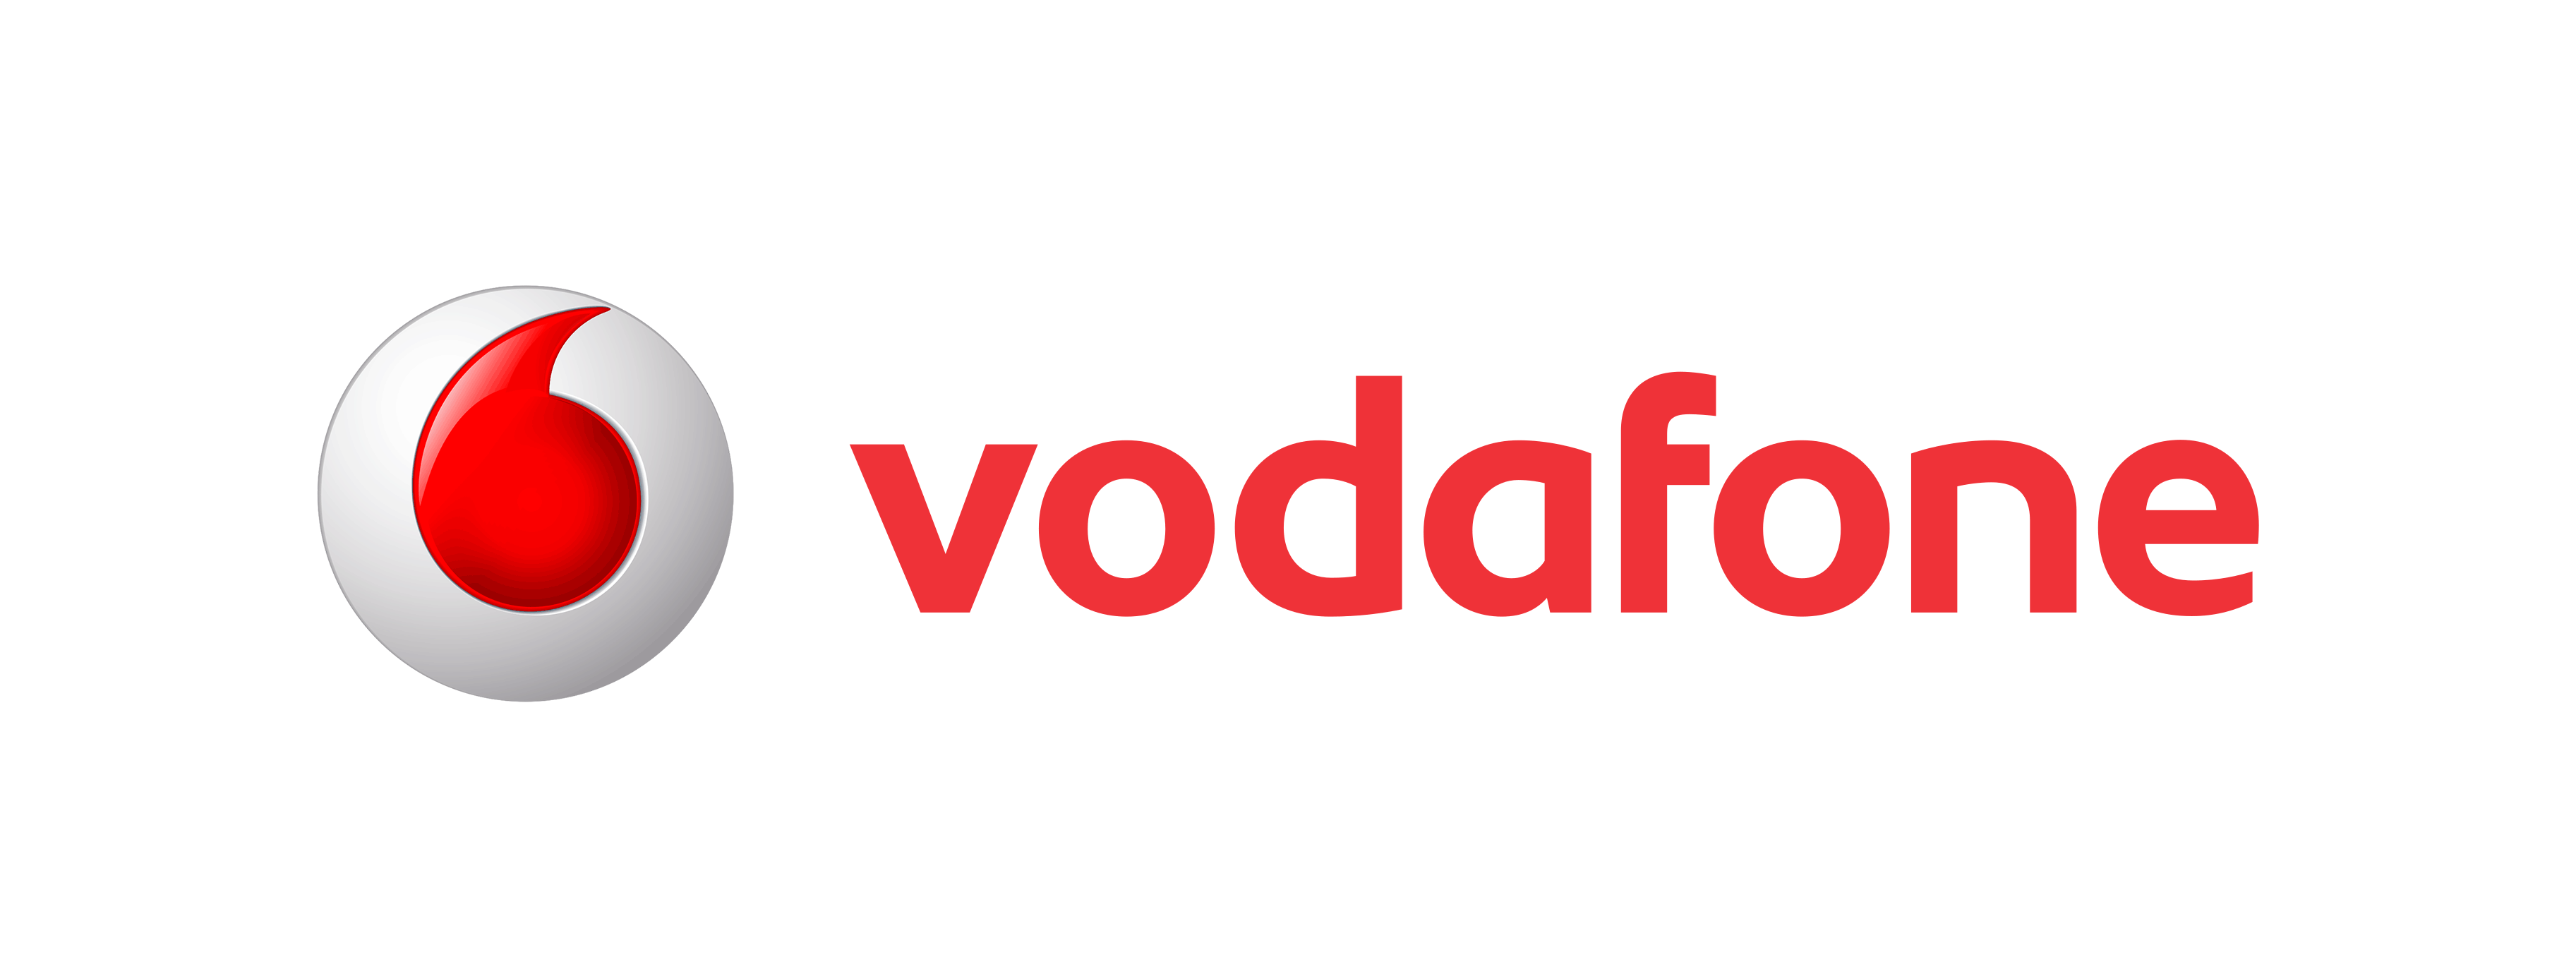 Vodafone Logo PNG - 179401